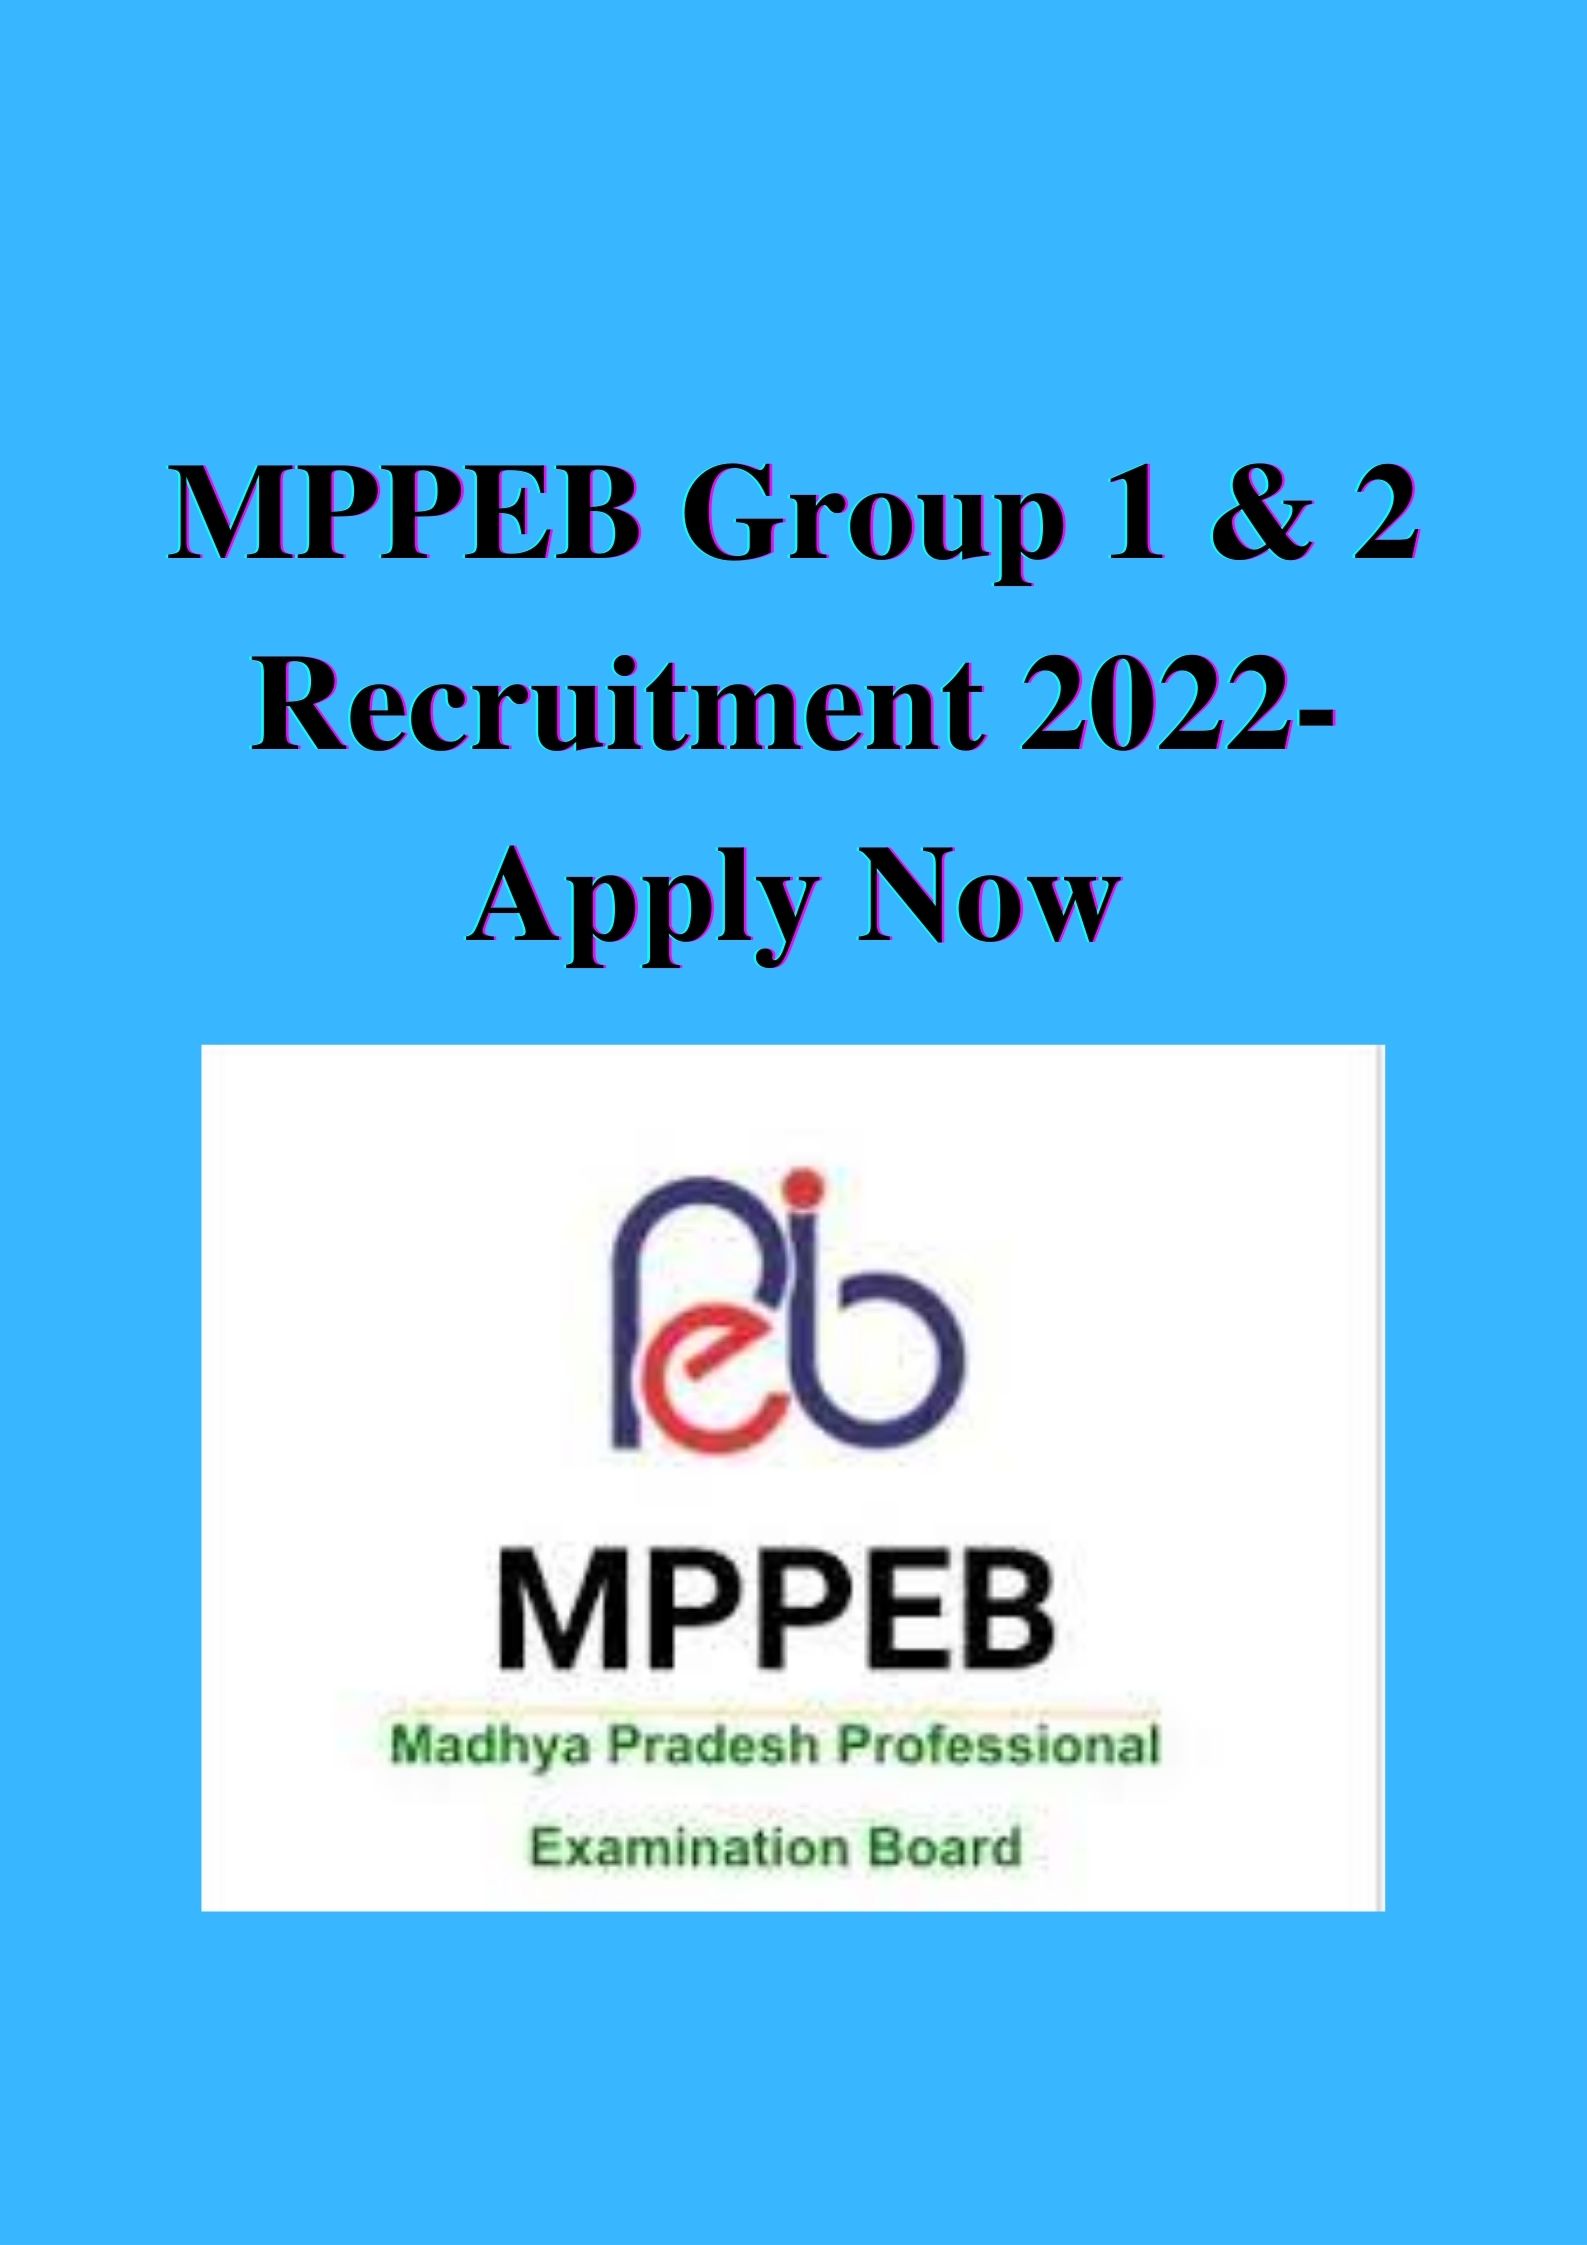 MPPEB Group 1 & 2 Recruitment 2022